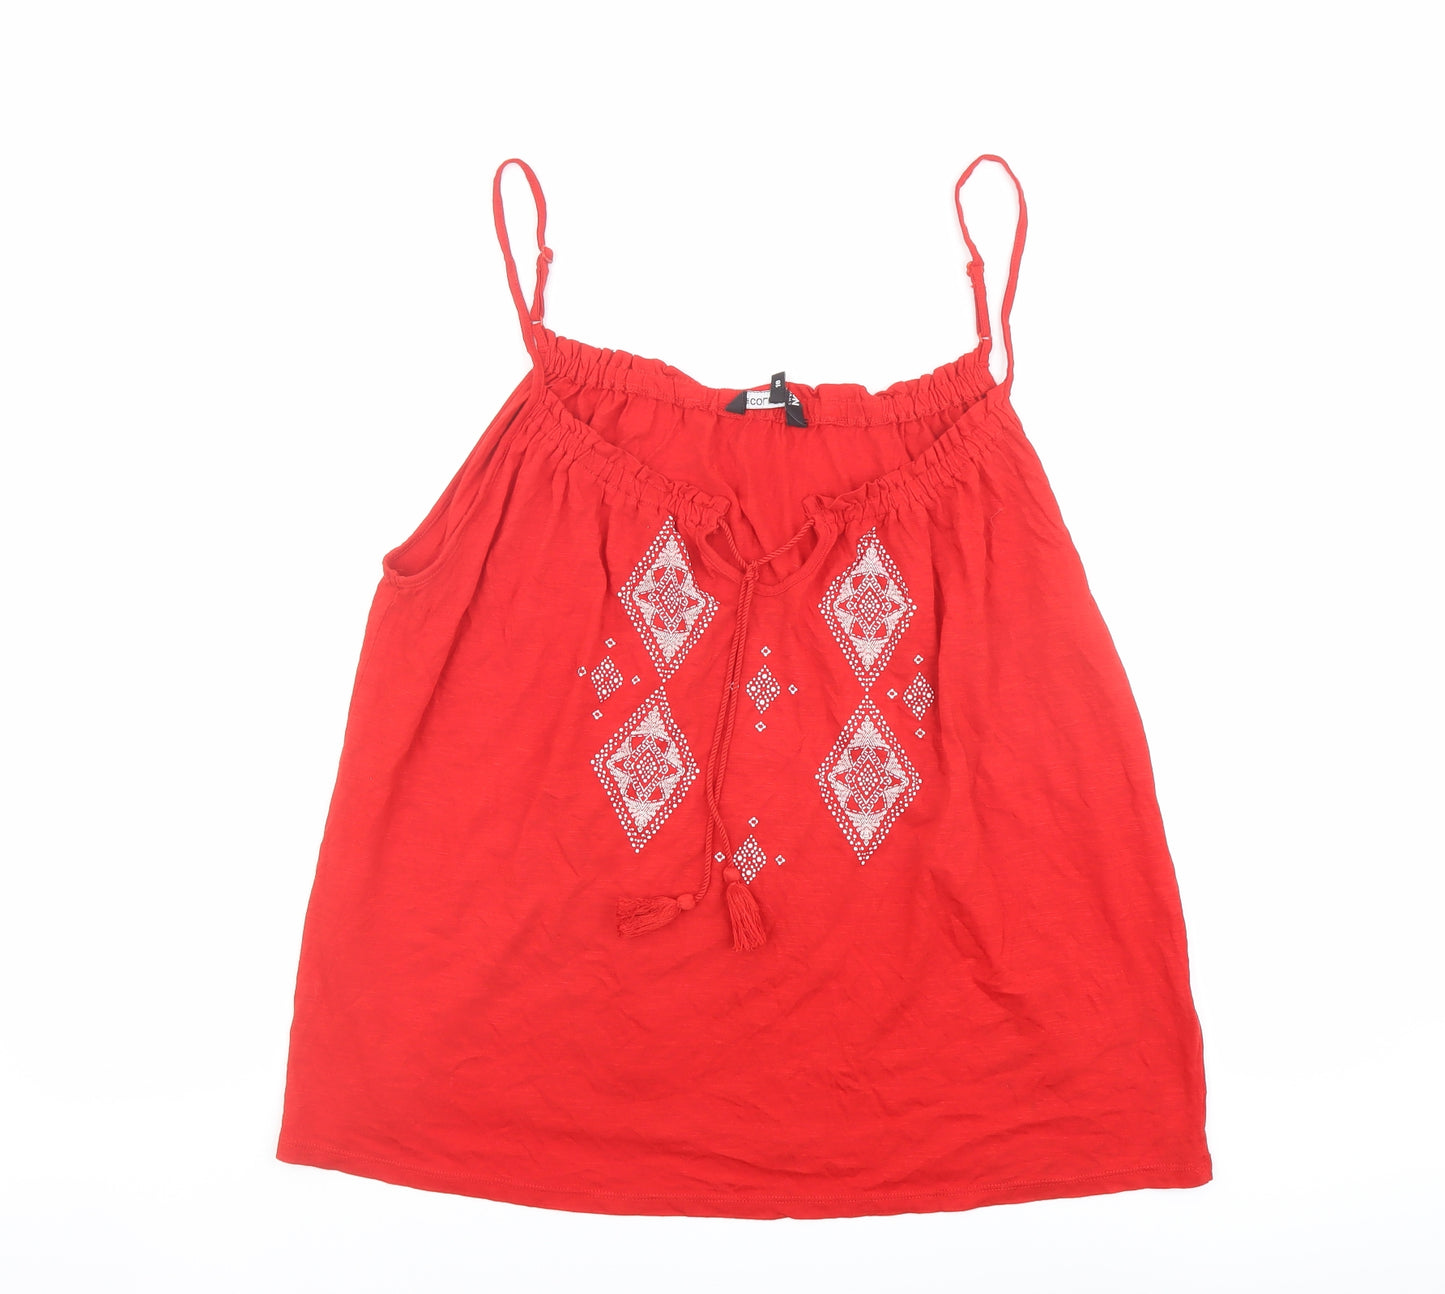 Debenhams Womens Red Cotton Camisole Blouse Size 18 Scoop Neck